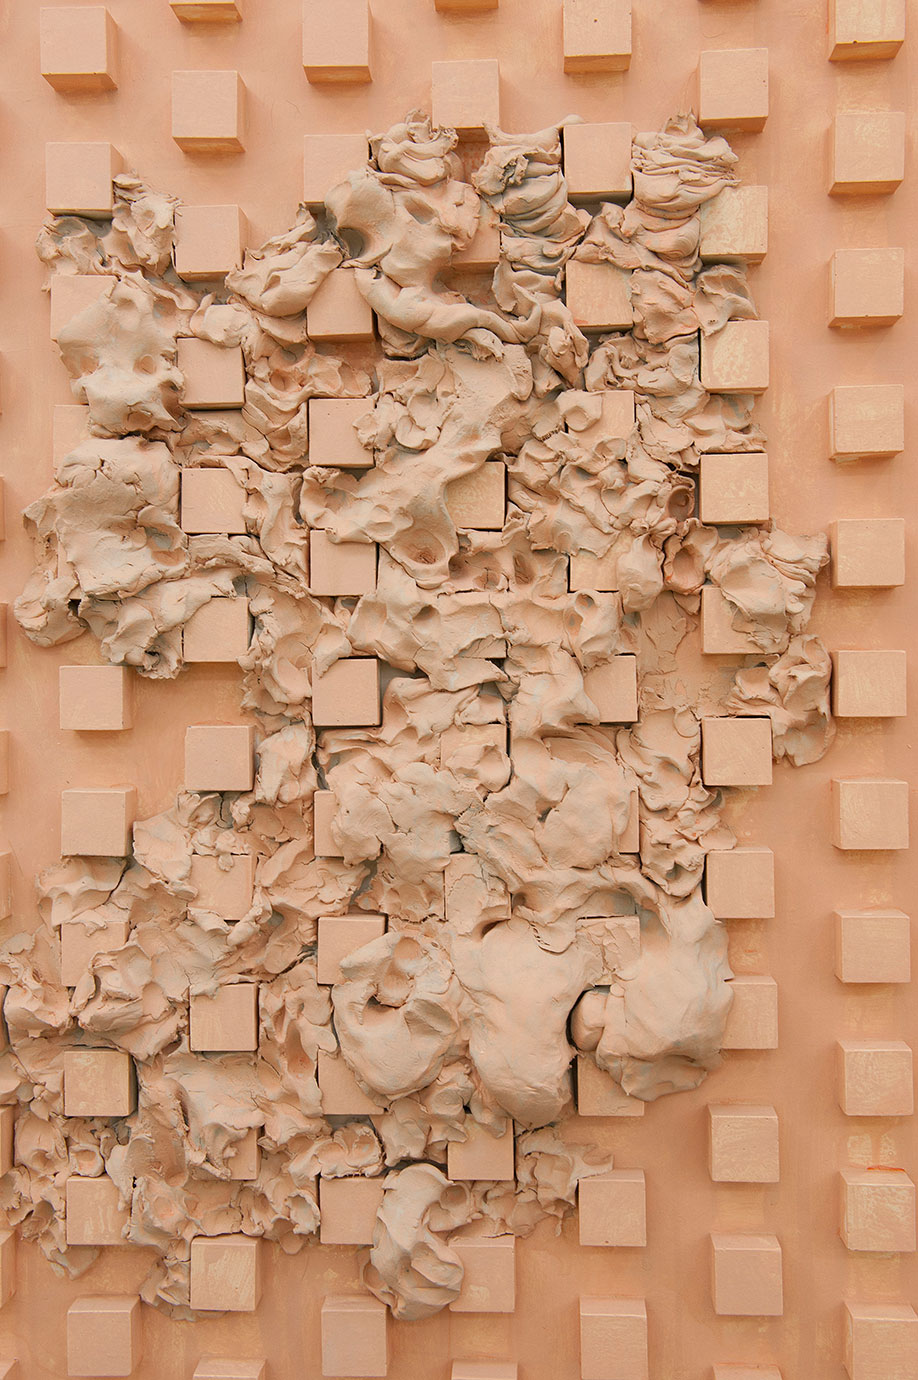 <b>Title: </b>Untitled<br /><b>Year: </b>2011<br /><b>Medium: </b>Plaster, air-drying clay, acrylic<br /><b>Size: </b>132 x 84 cm